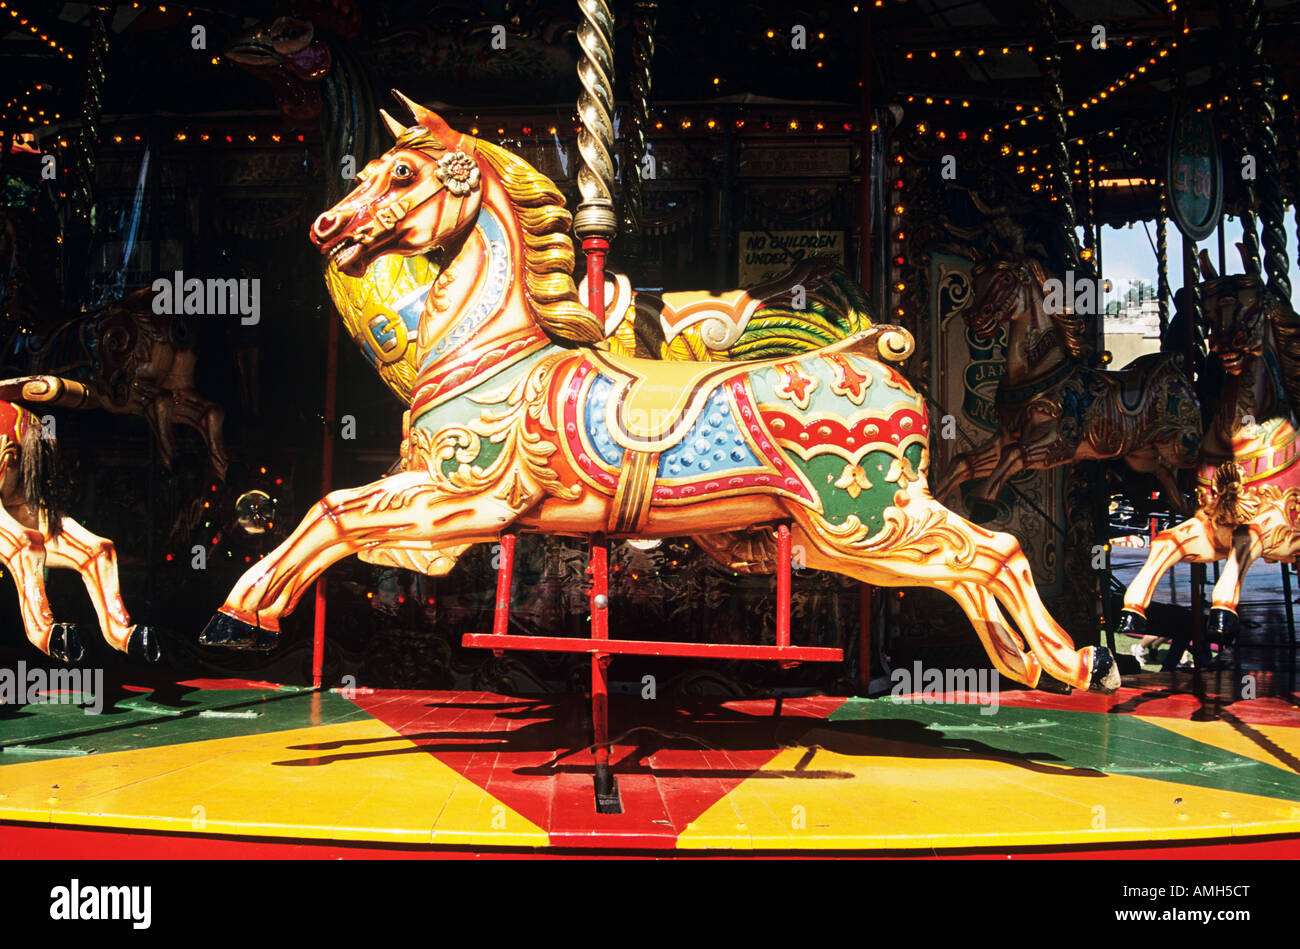 Colourful painted horse on fairground carousel, England Stock Photo